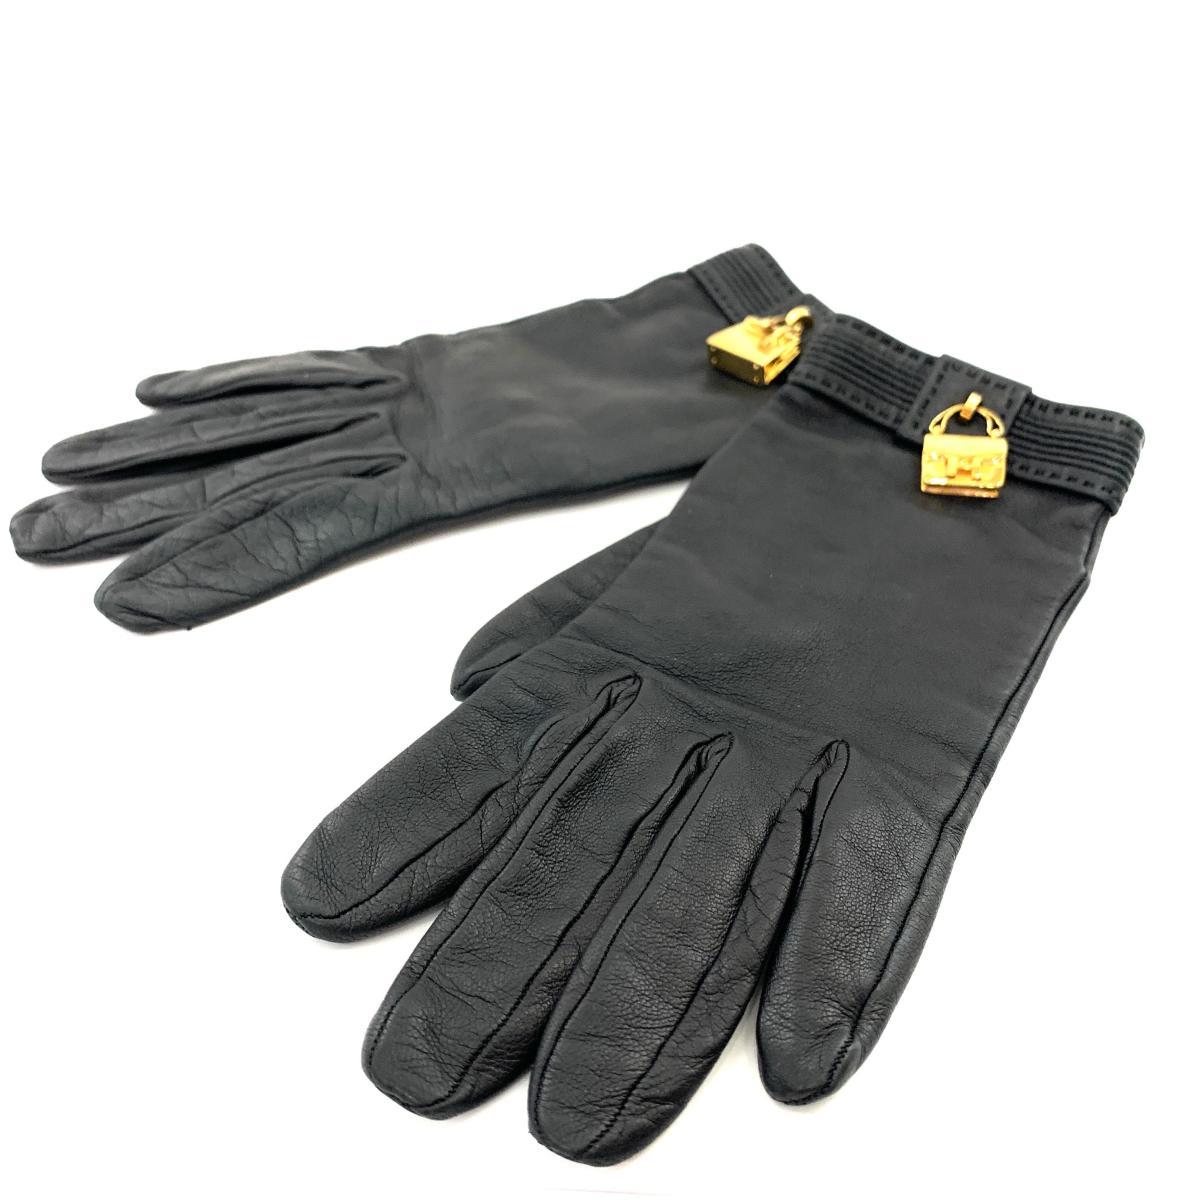 ◆HERMES エルメス レザーグローブ ◆ ブラック 革 バッグ型チャーム レディース ブランド 手袋 glove グローブ 服飾小物 KO1014